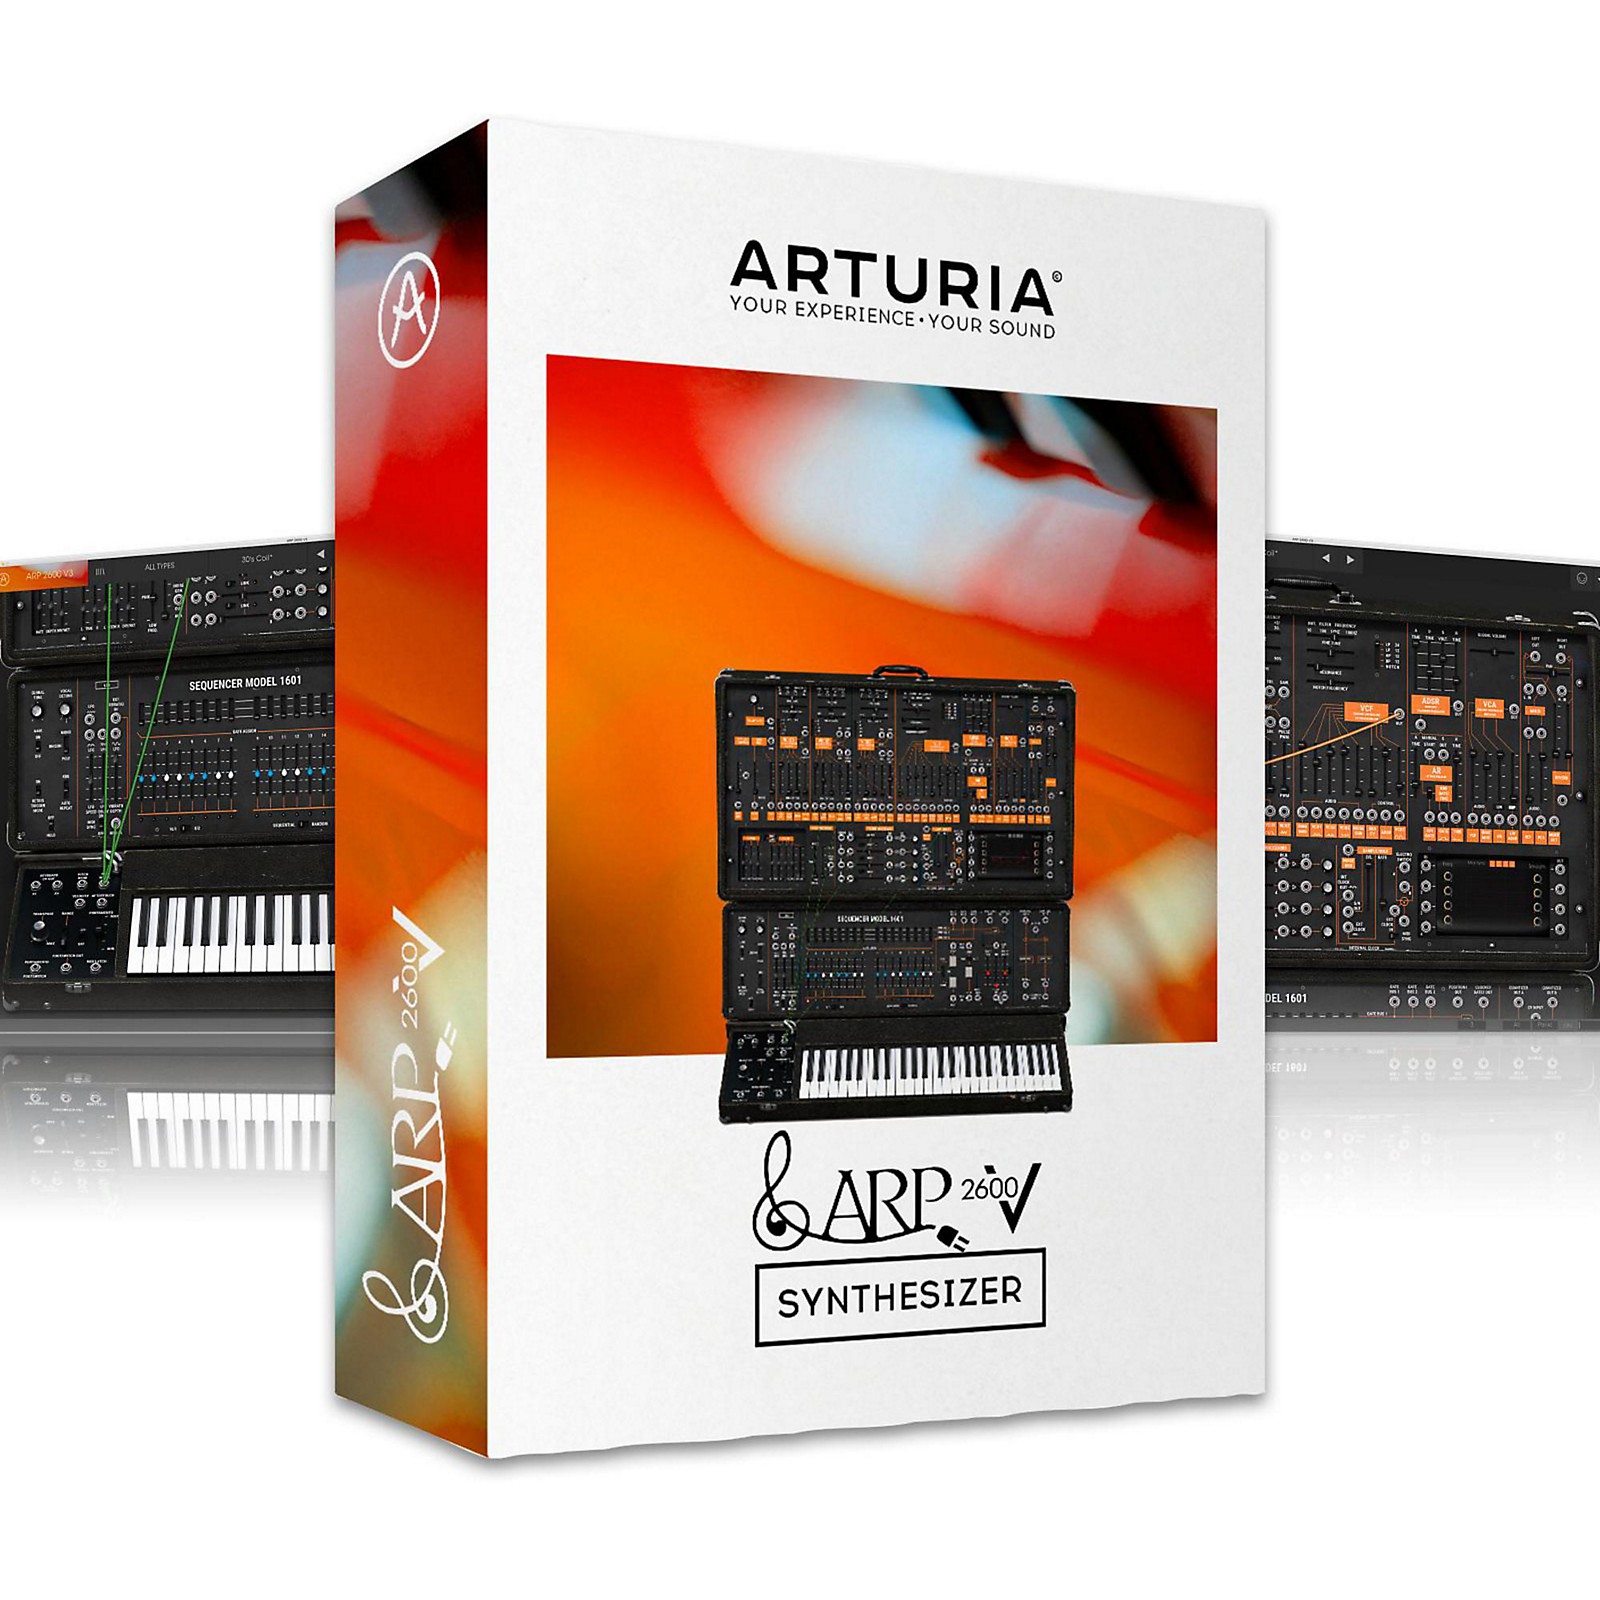 Arturia ARP 2600 V download the last version for apple